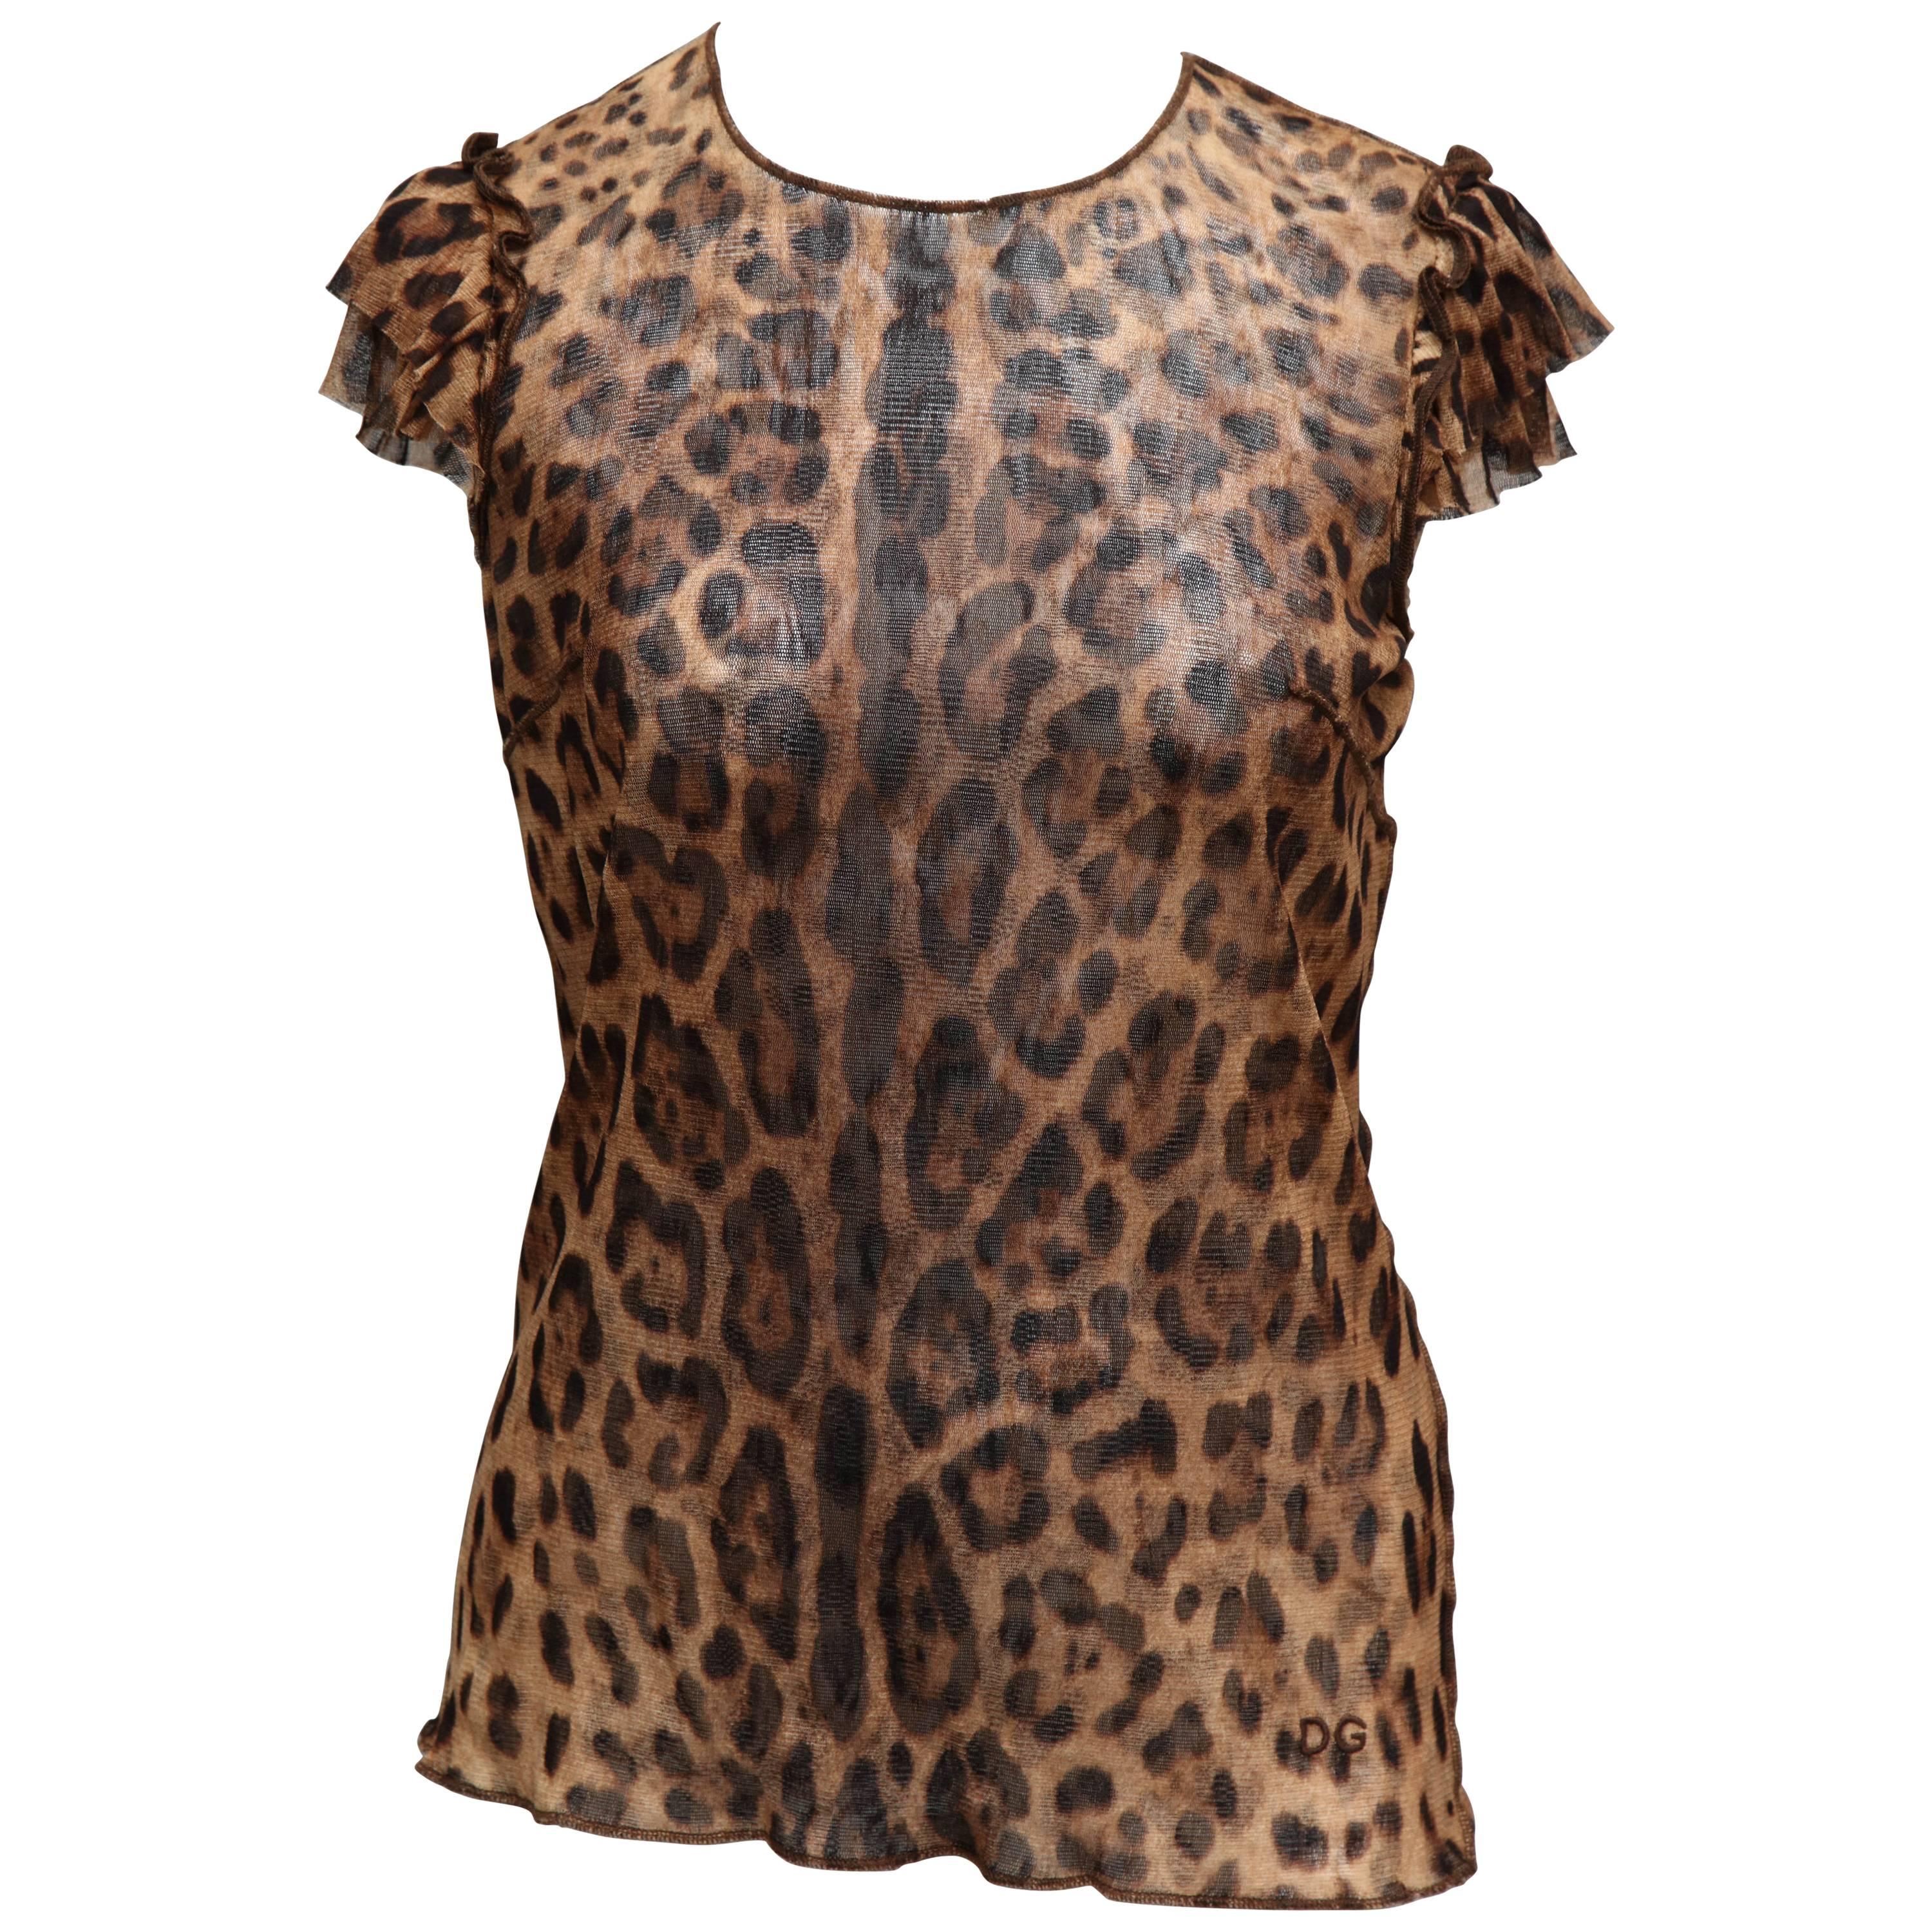 Dolce & Gabbana Leopard Print Top